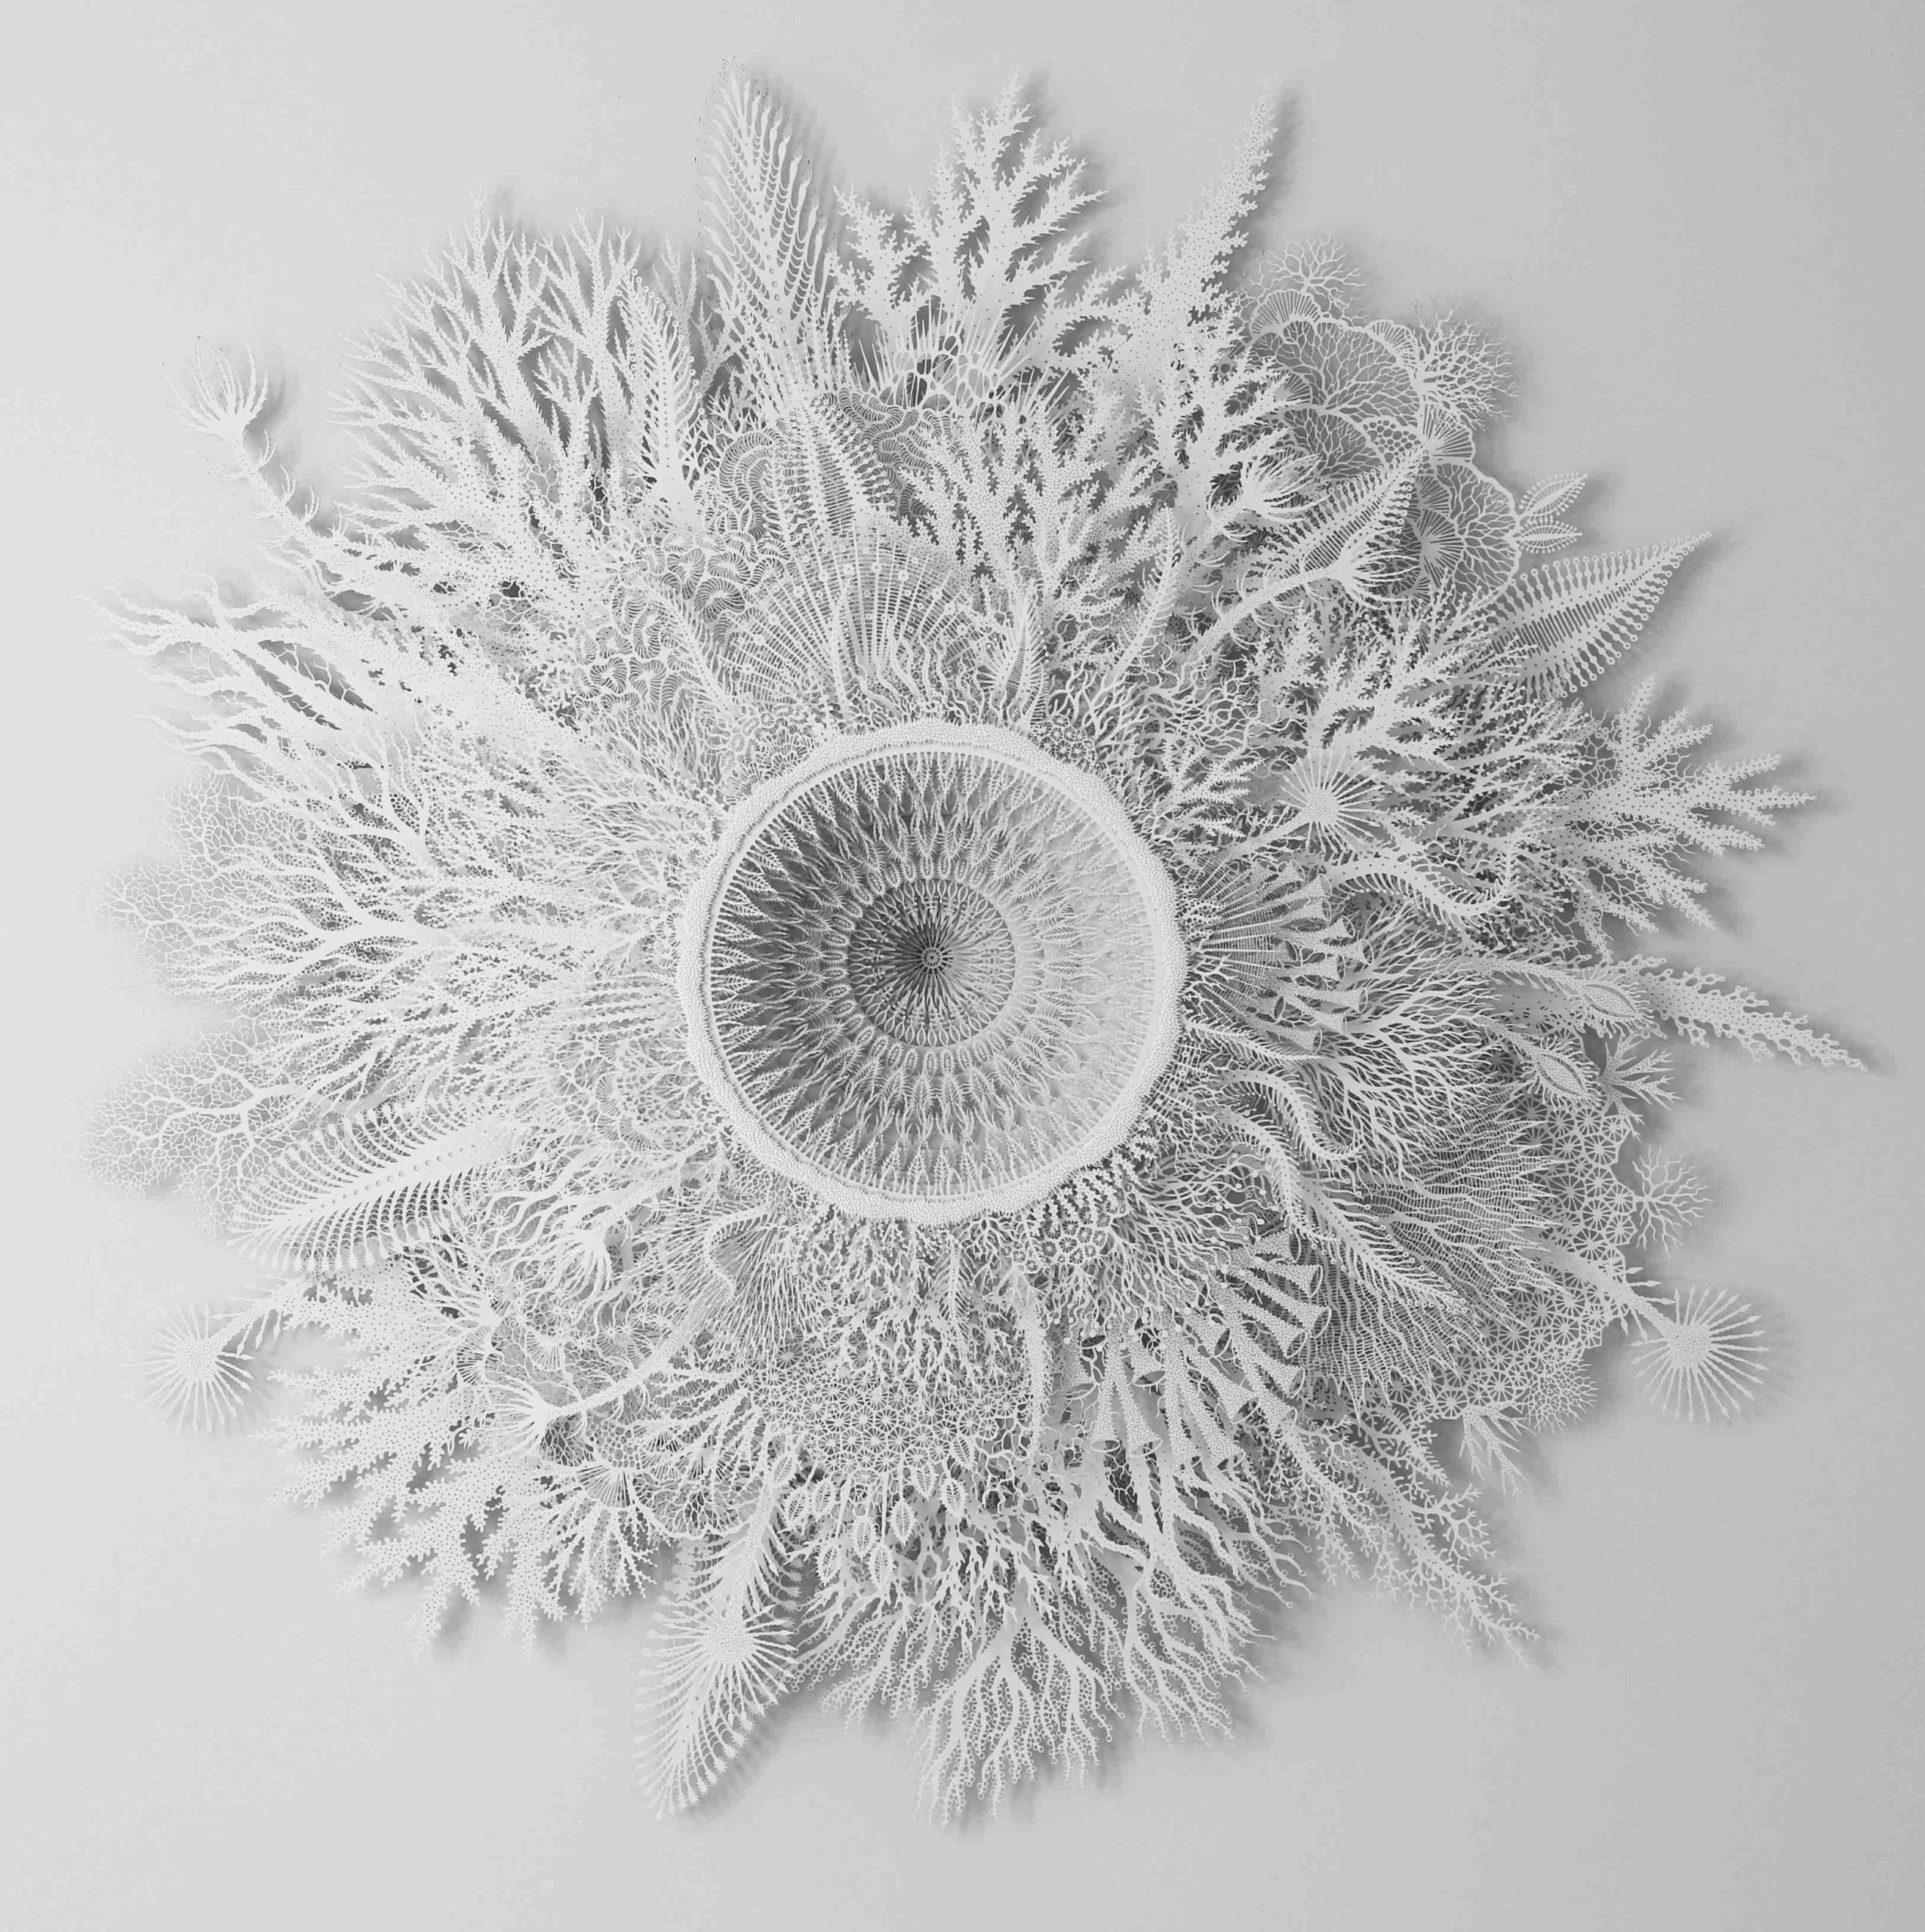 Coral Ghost variation